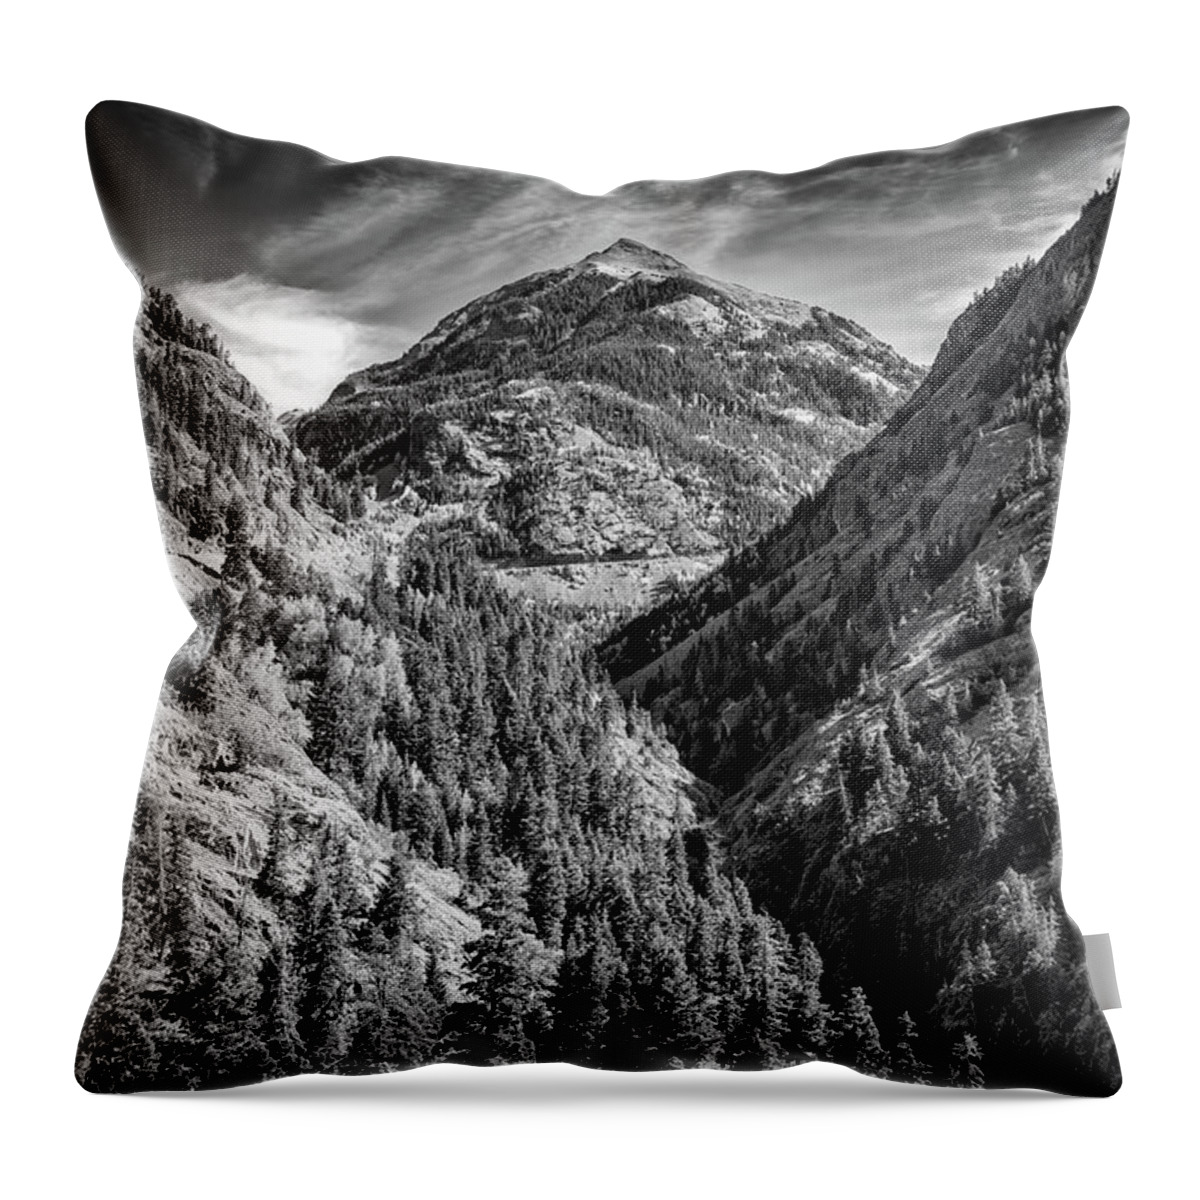 Colorado Throw Pillow featuring the photograph Abrams Mountain Black and White by Rick Berk